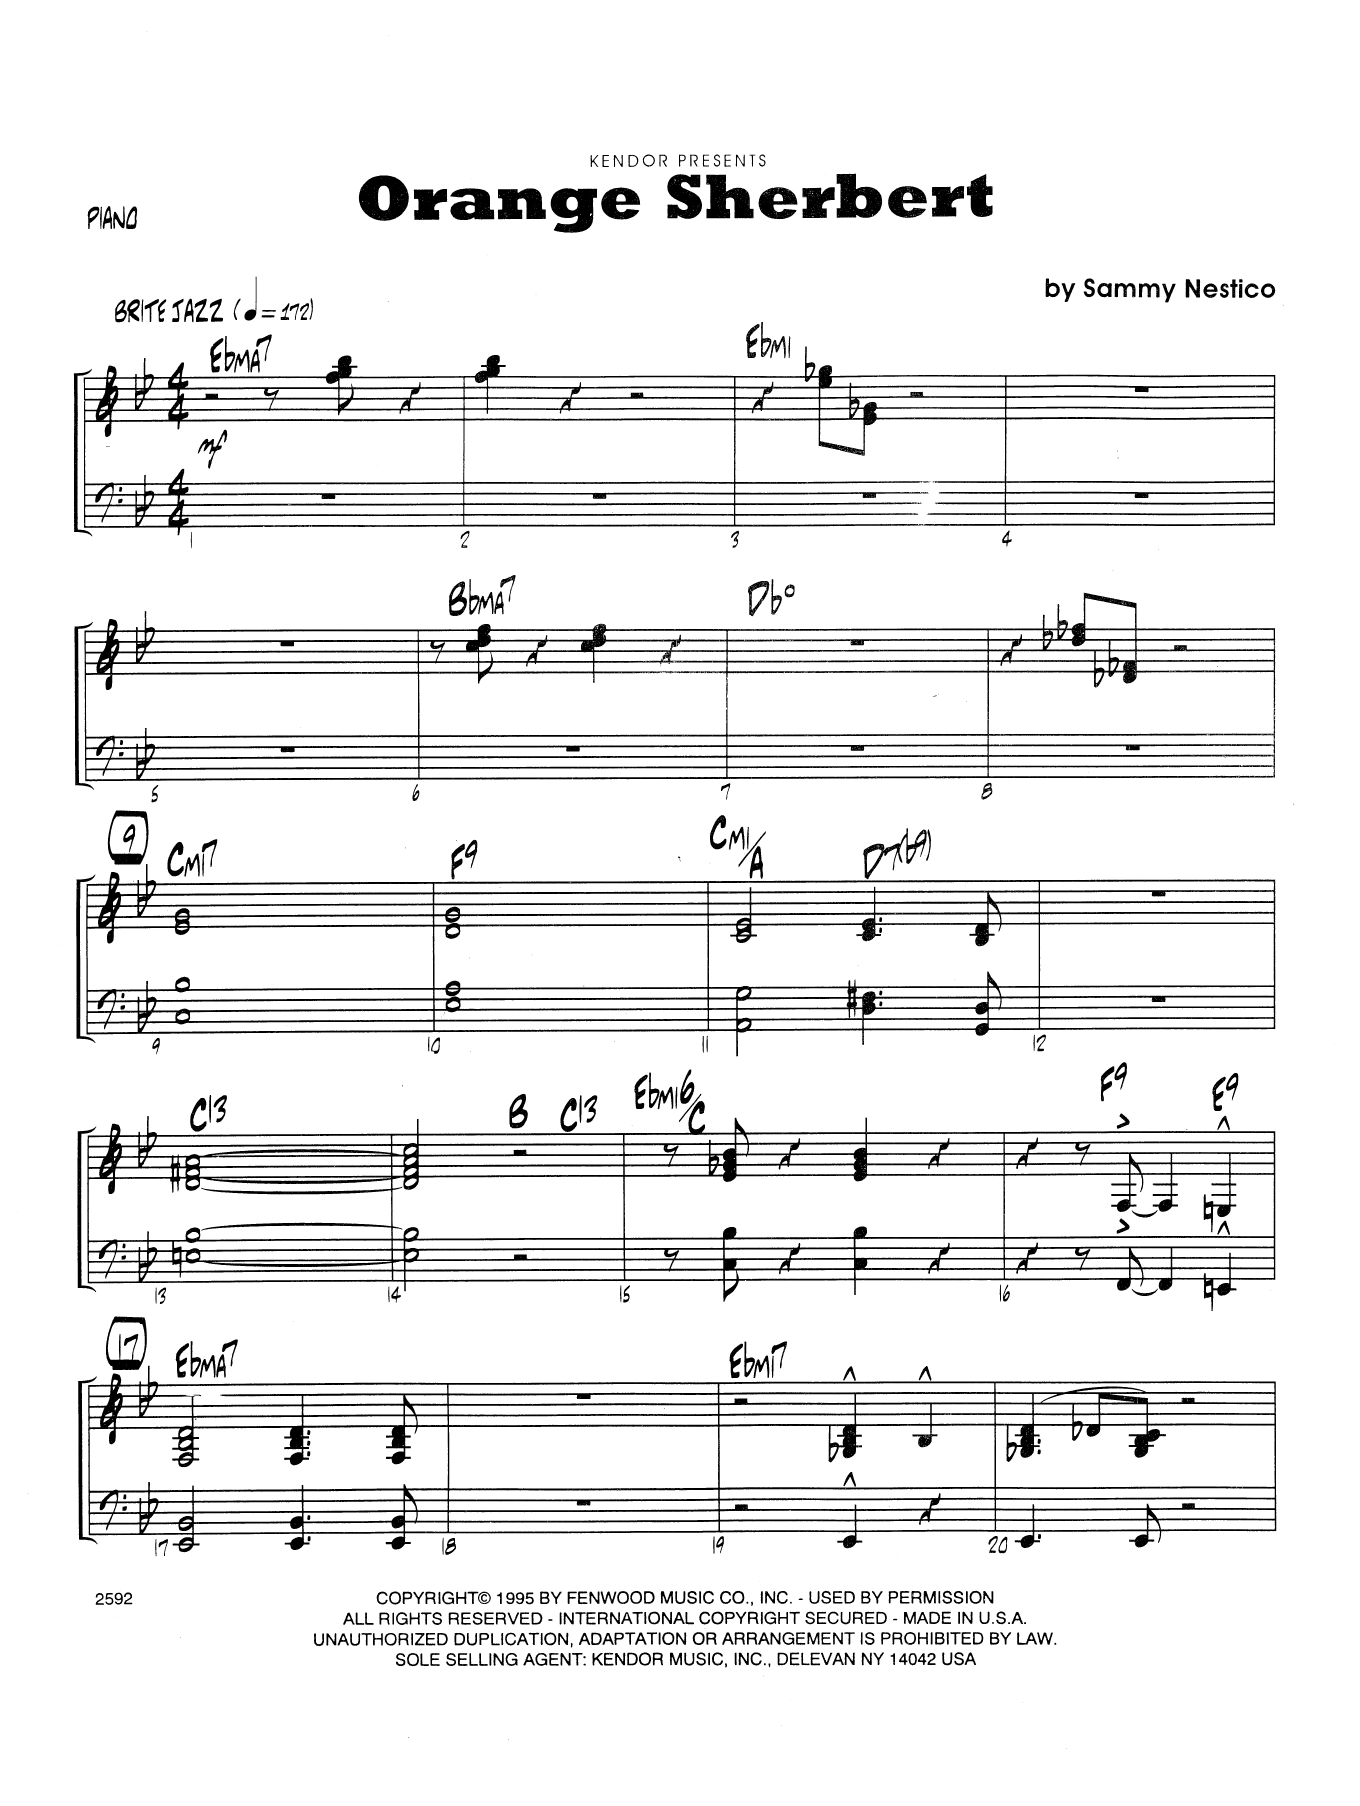 Download Sammy Nestico Orange Sherbert - Piano Sheet Music